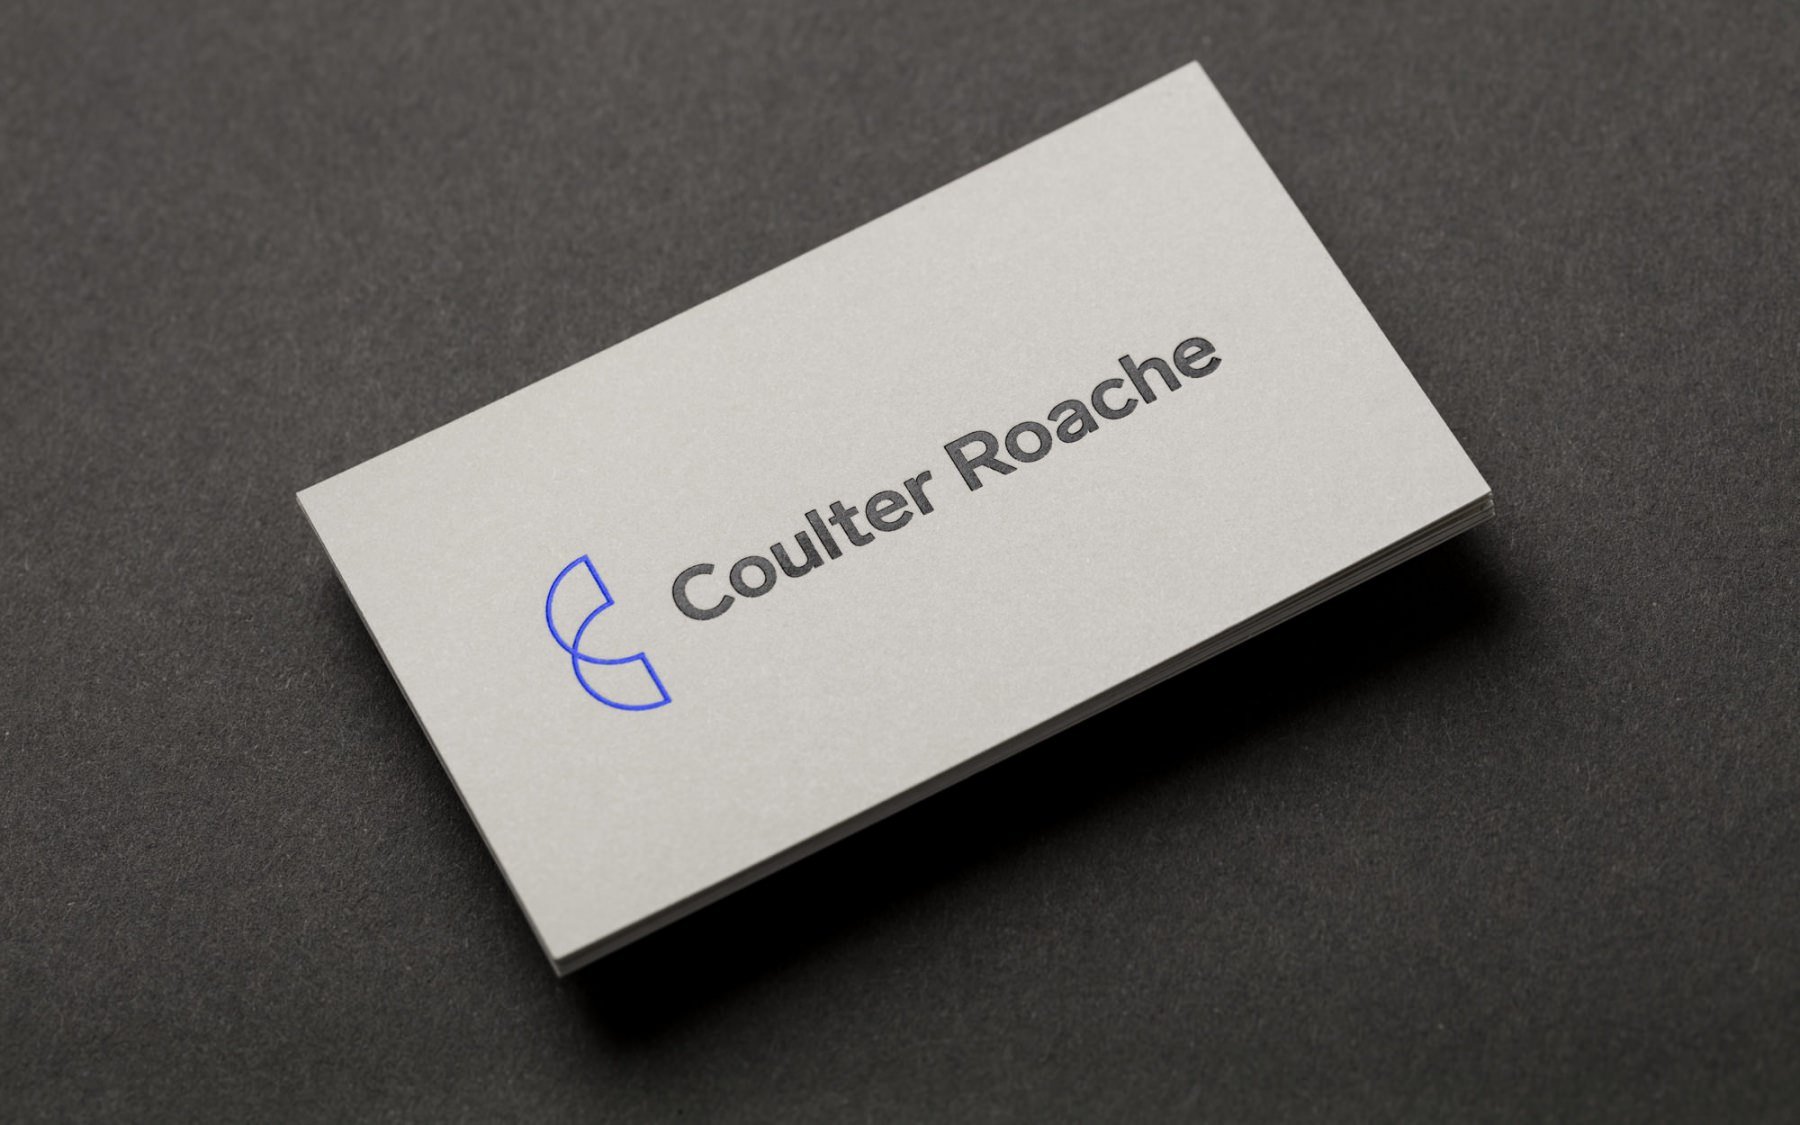 coulter-roache-23-6